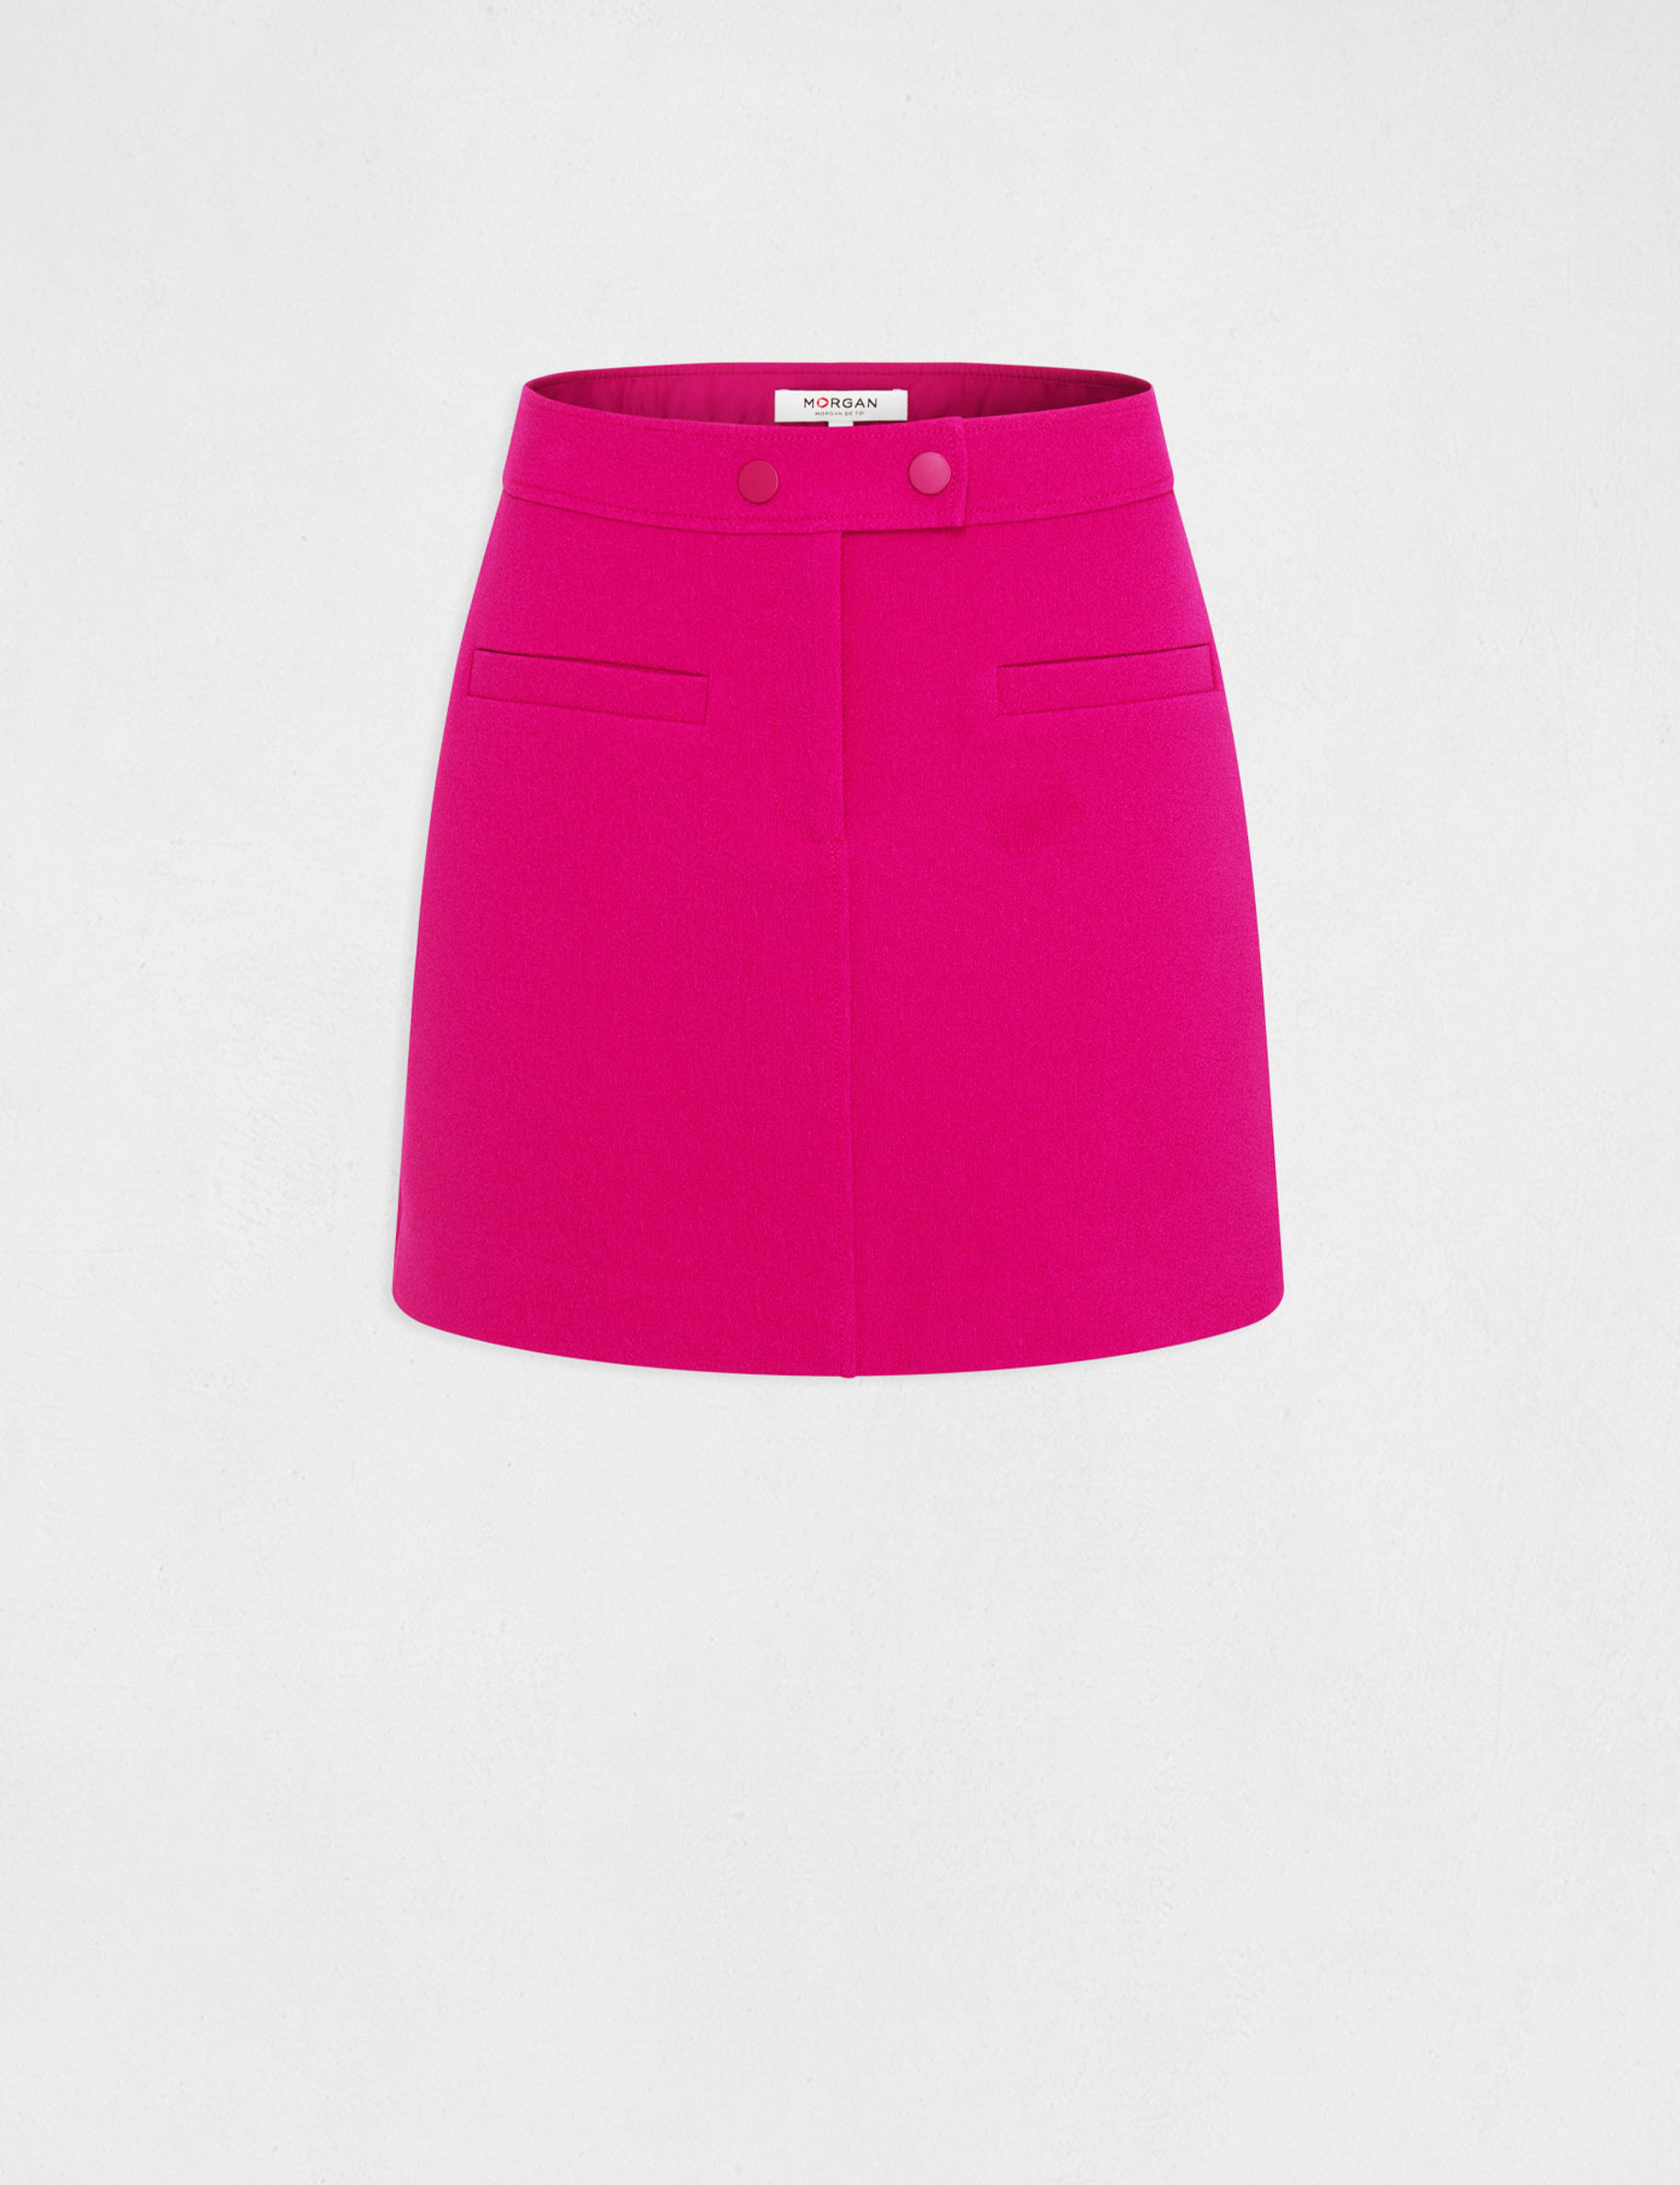 High-waisted A-line skirt raspberry ladies'